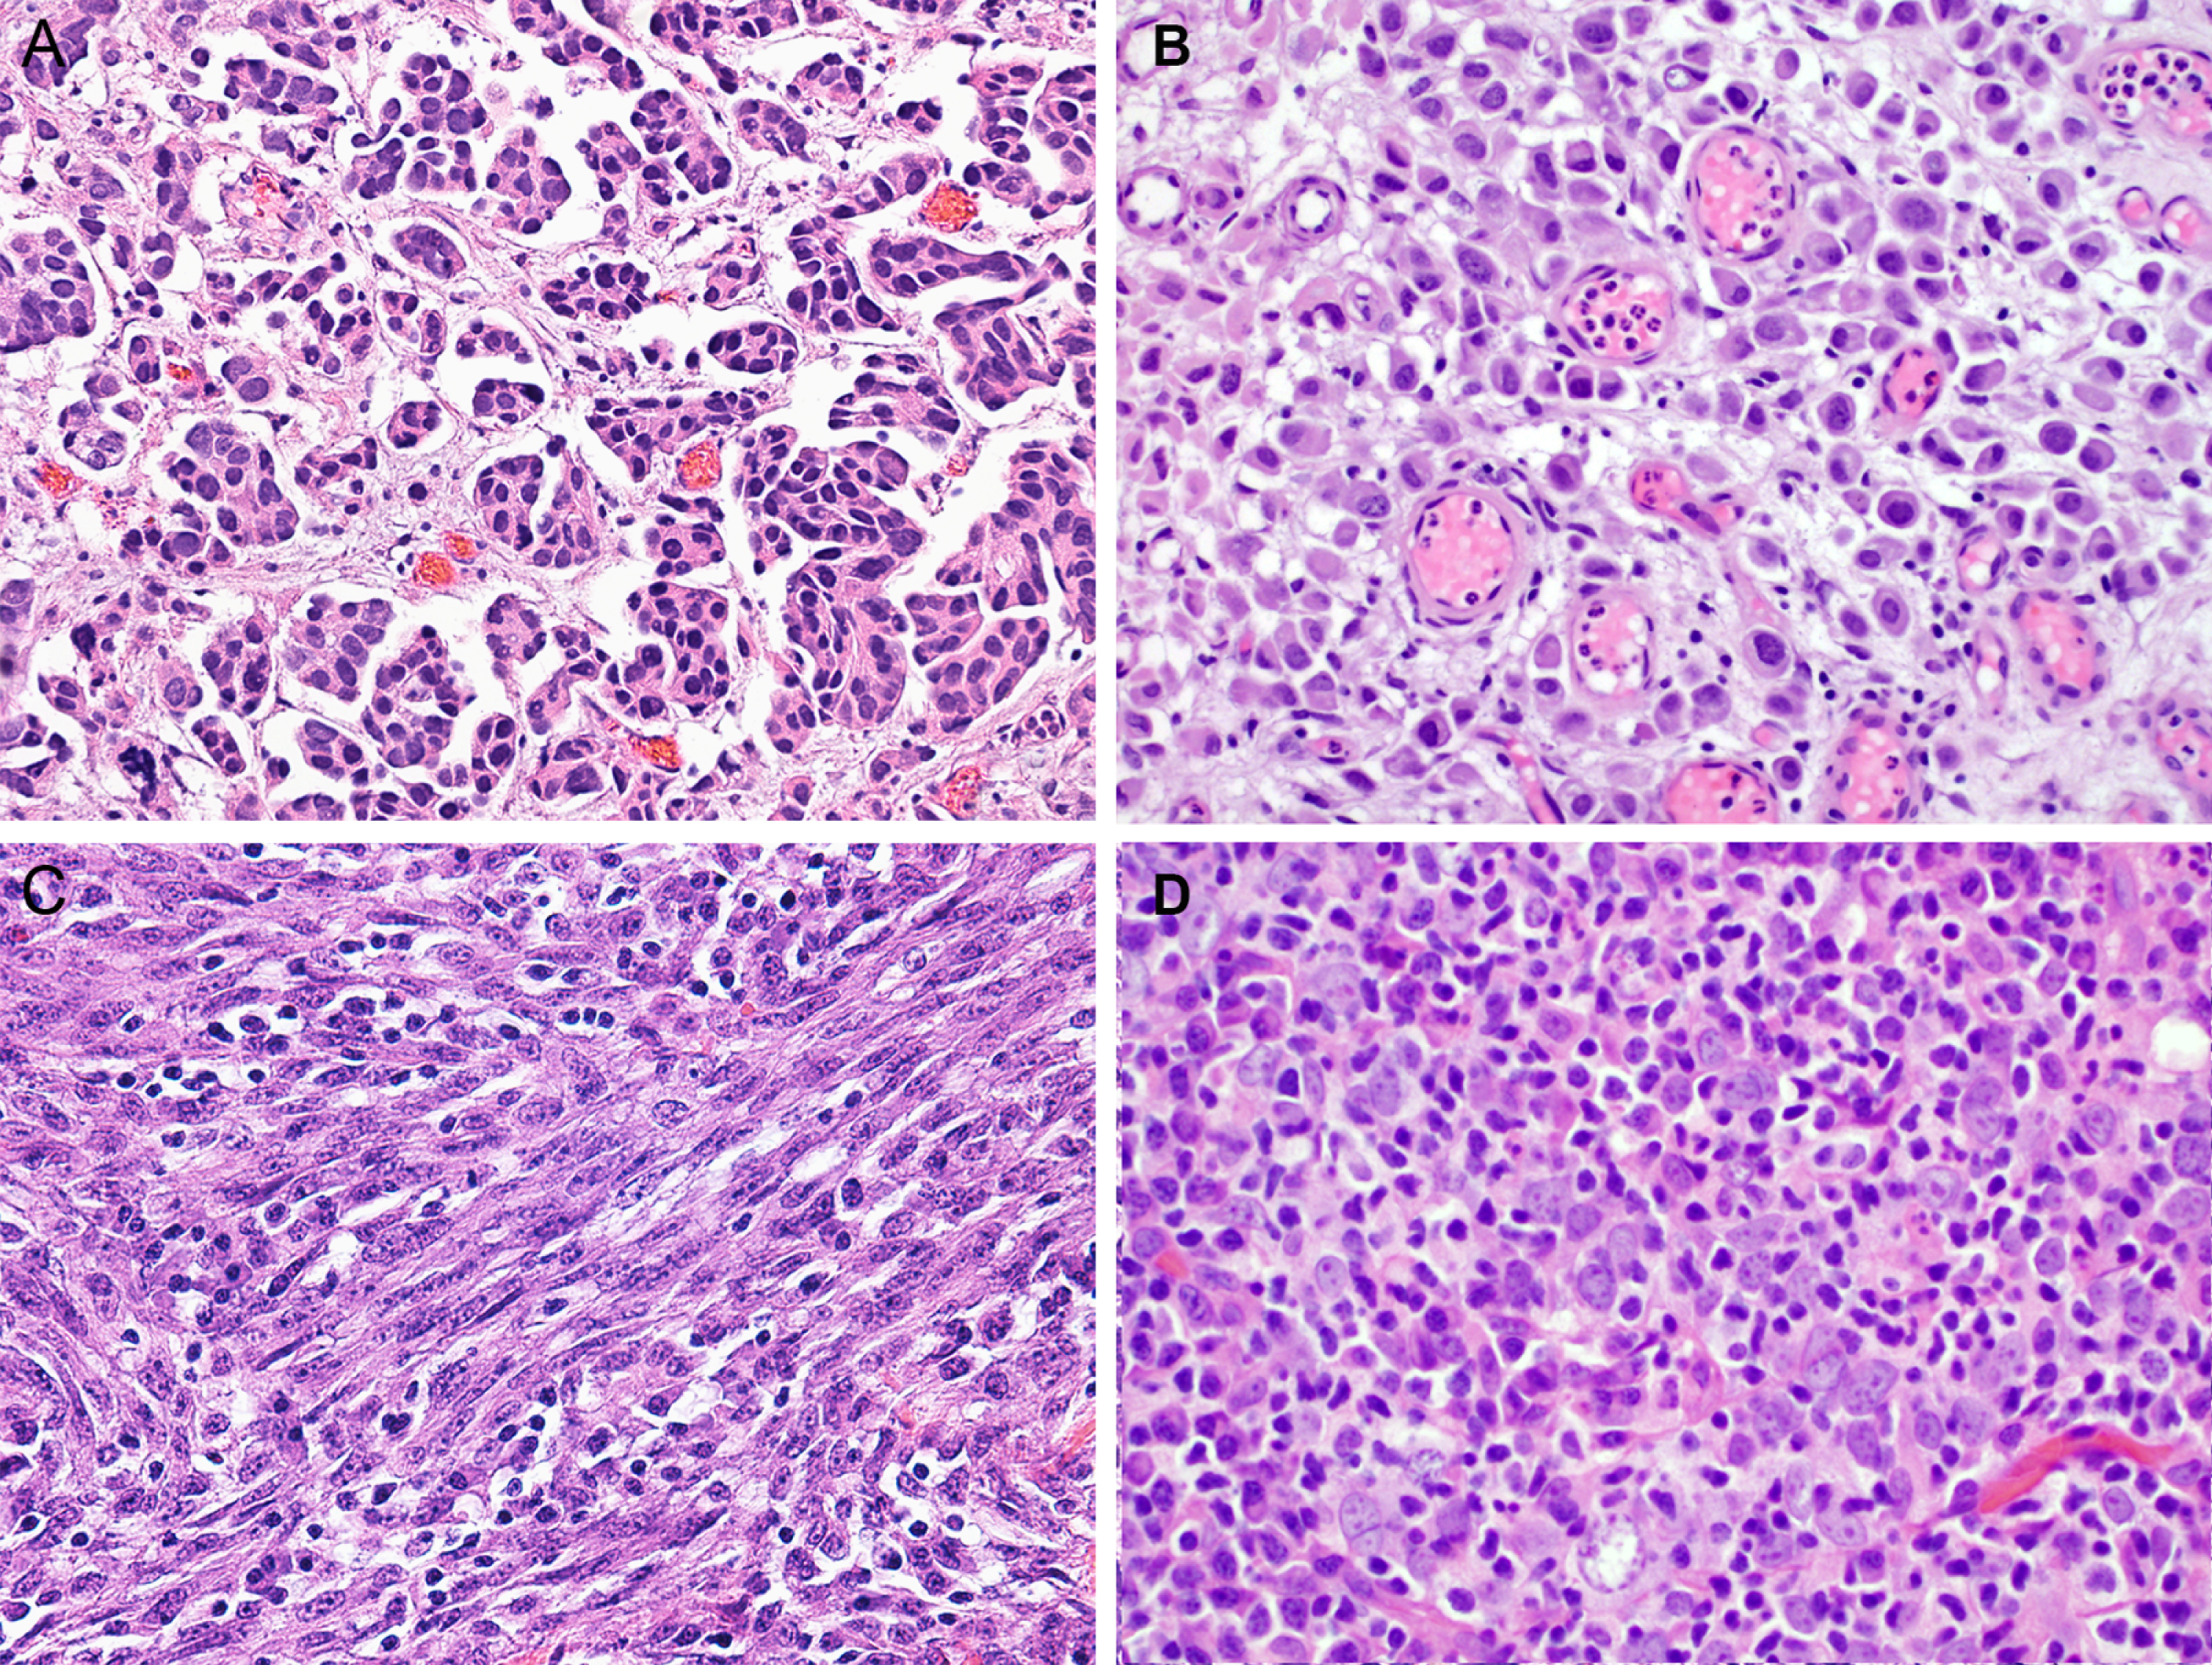 Different urothelial carcinoma subtypes. A. Micropapillary (×200). B. Plasmacytoid (×200). C. Sarcomatoid (×200). D. Lymphoepithelioma-like subtype (×200).